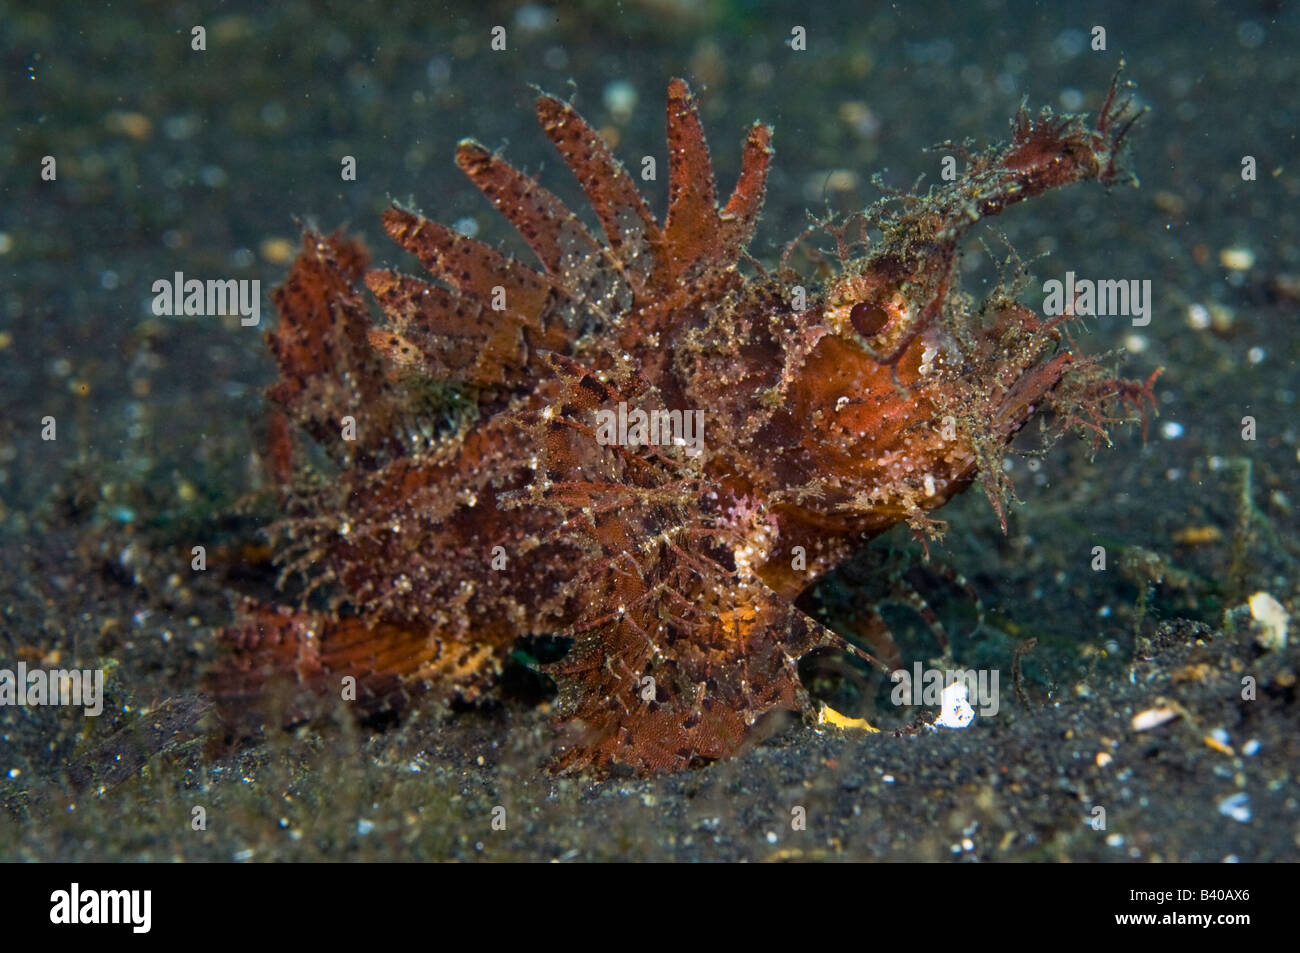 Ambon Scorpionfish Pteroidichthys amboinensis in Lembeh Strait Indonesia Stock Photo